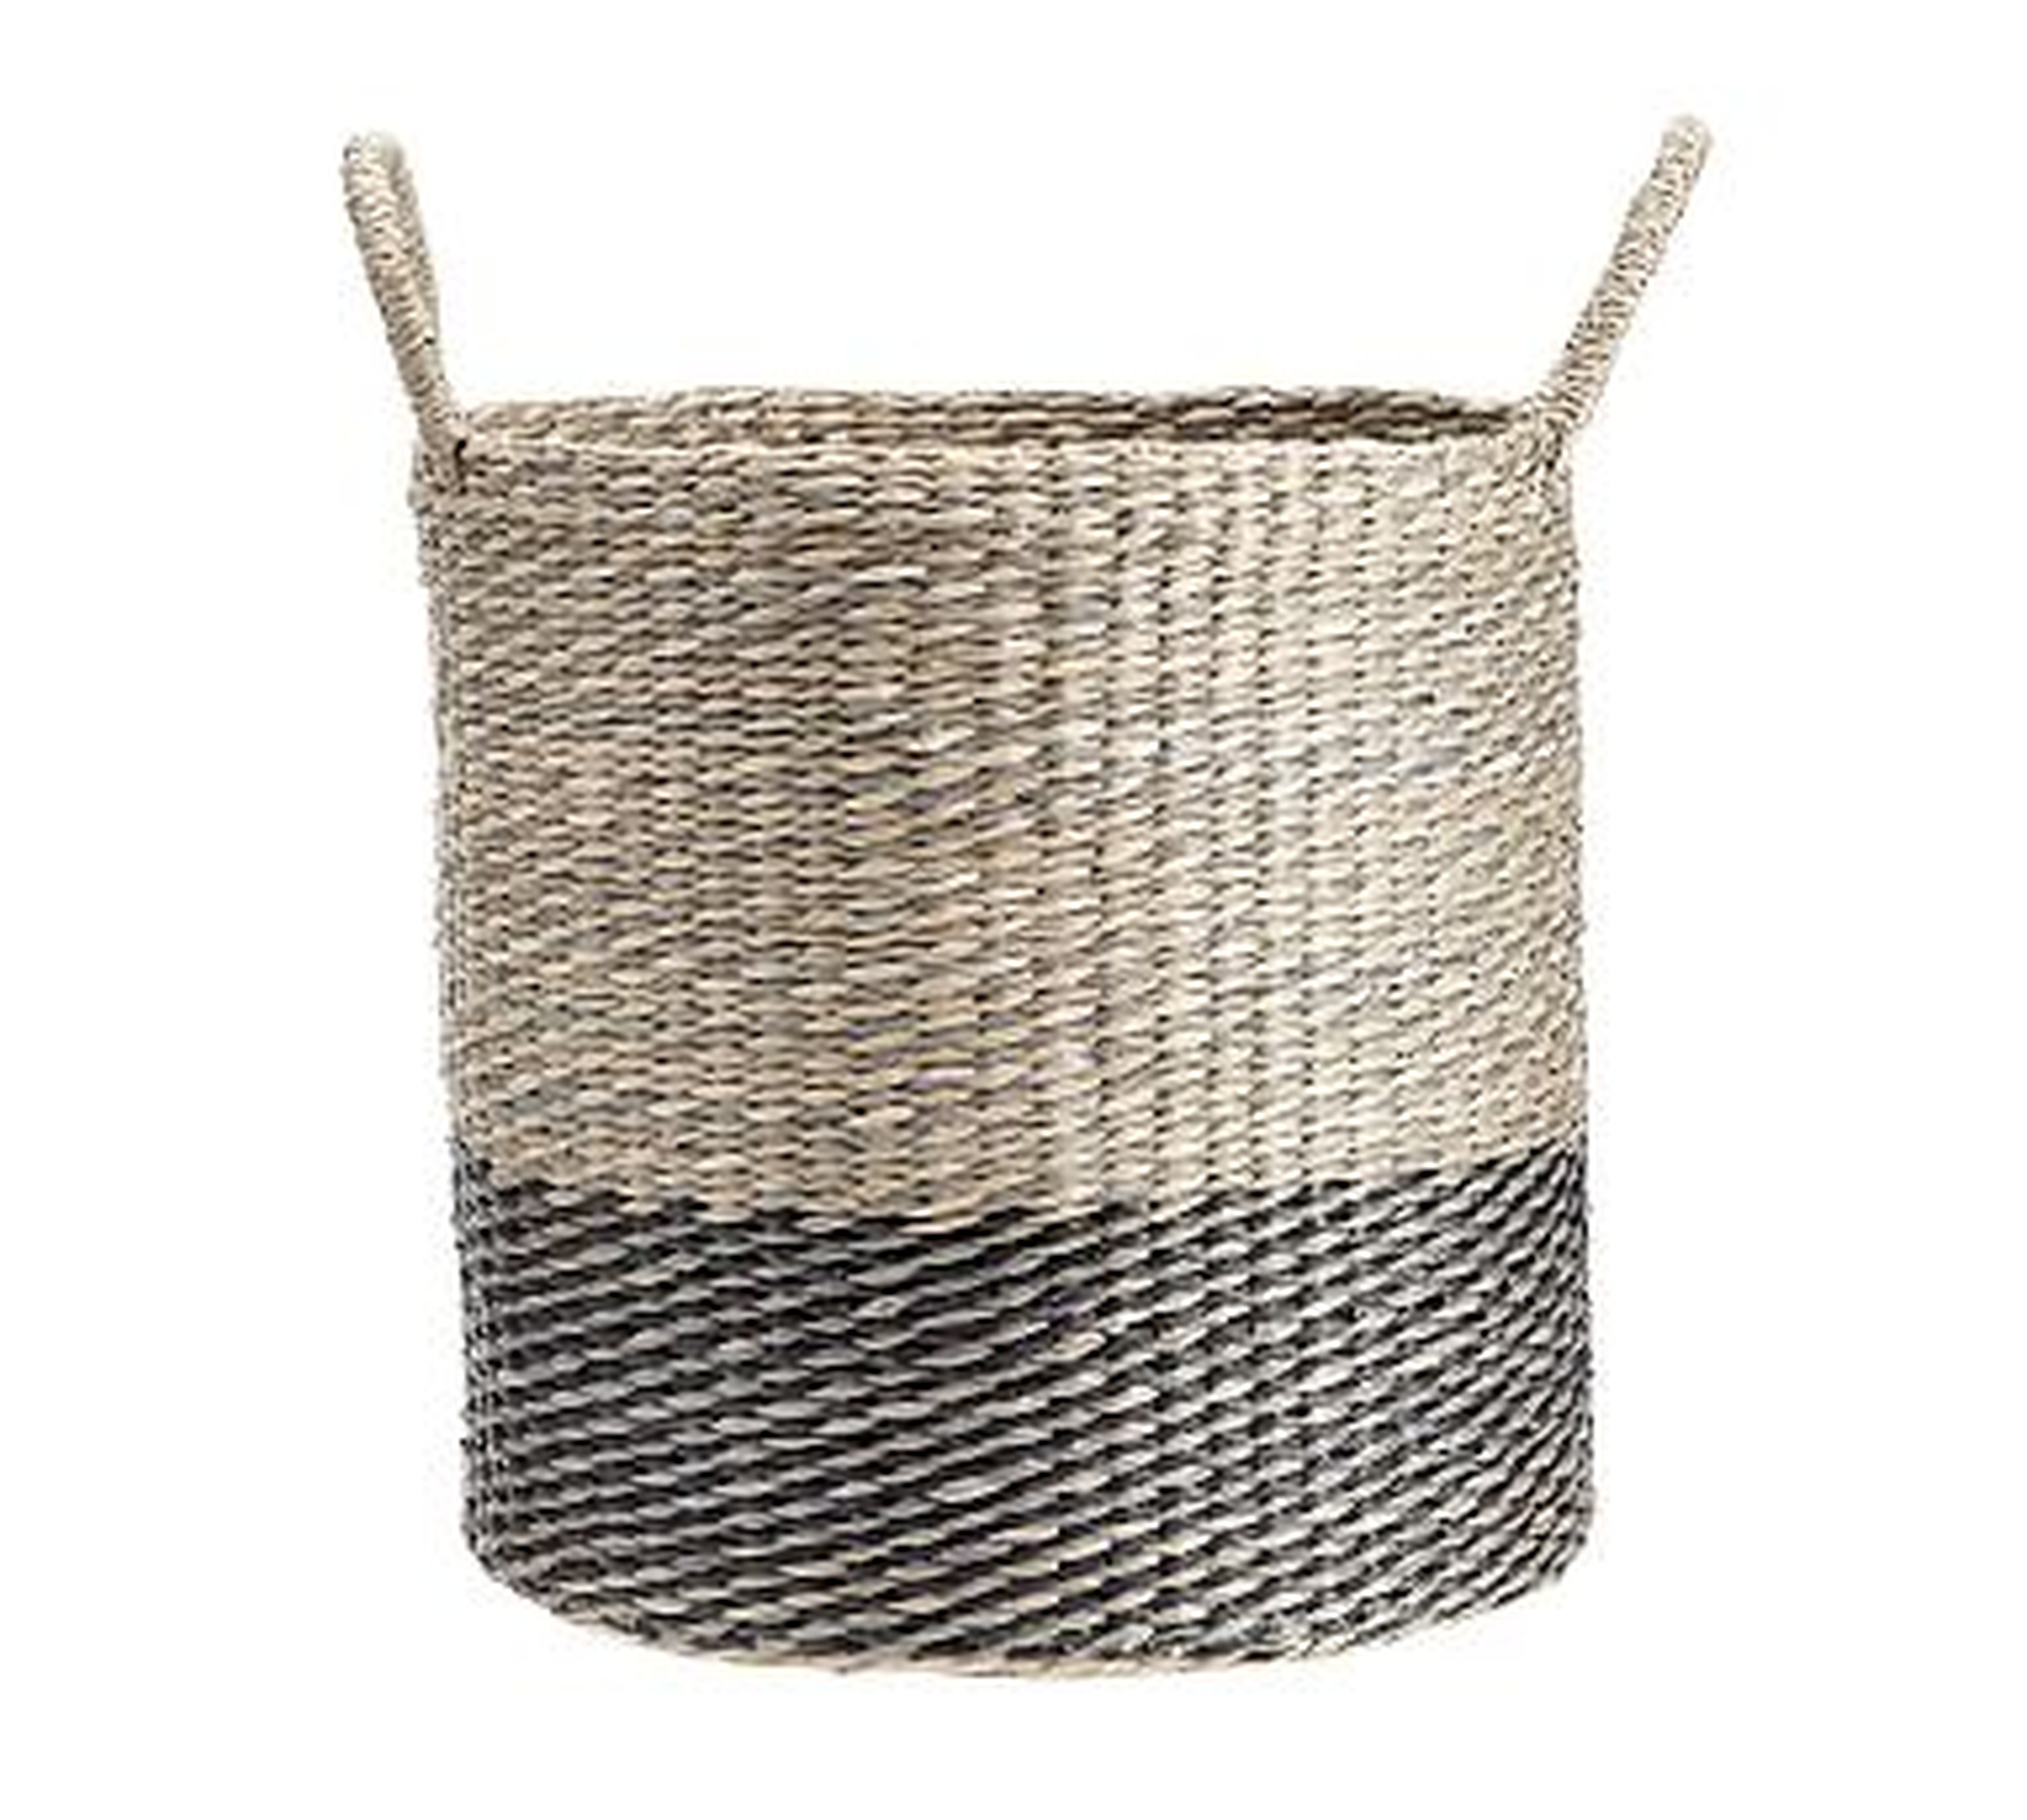 Lisbon Two-Tone Tote Basket, Natural/Black, Medium - Pottery Barn